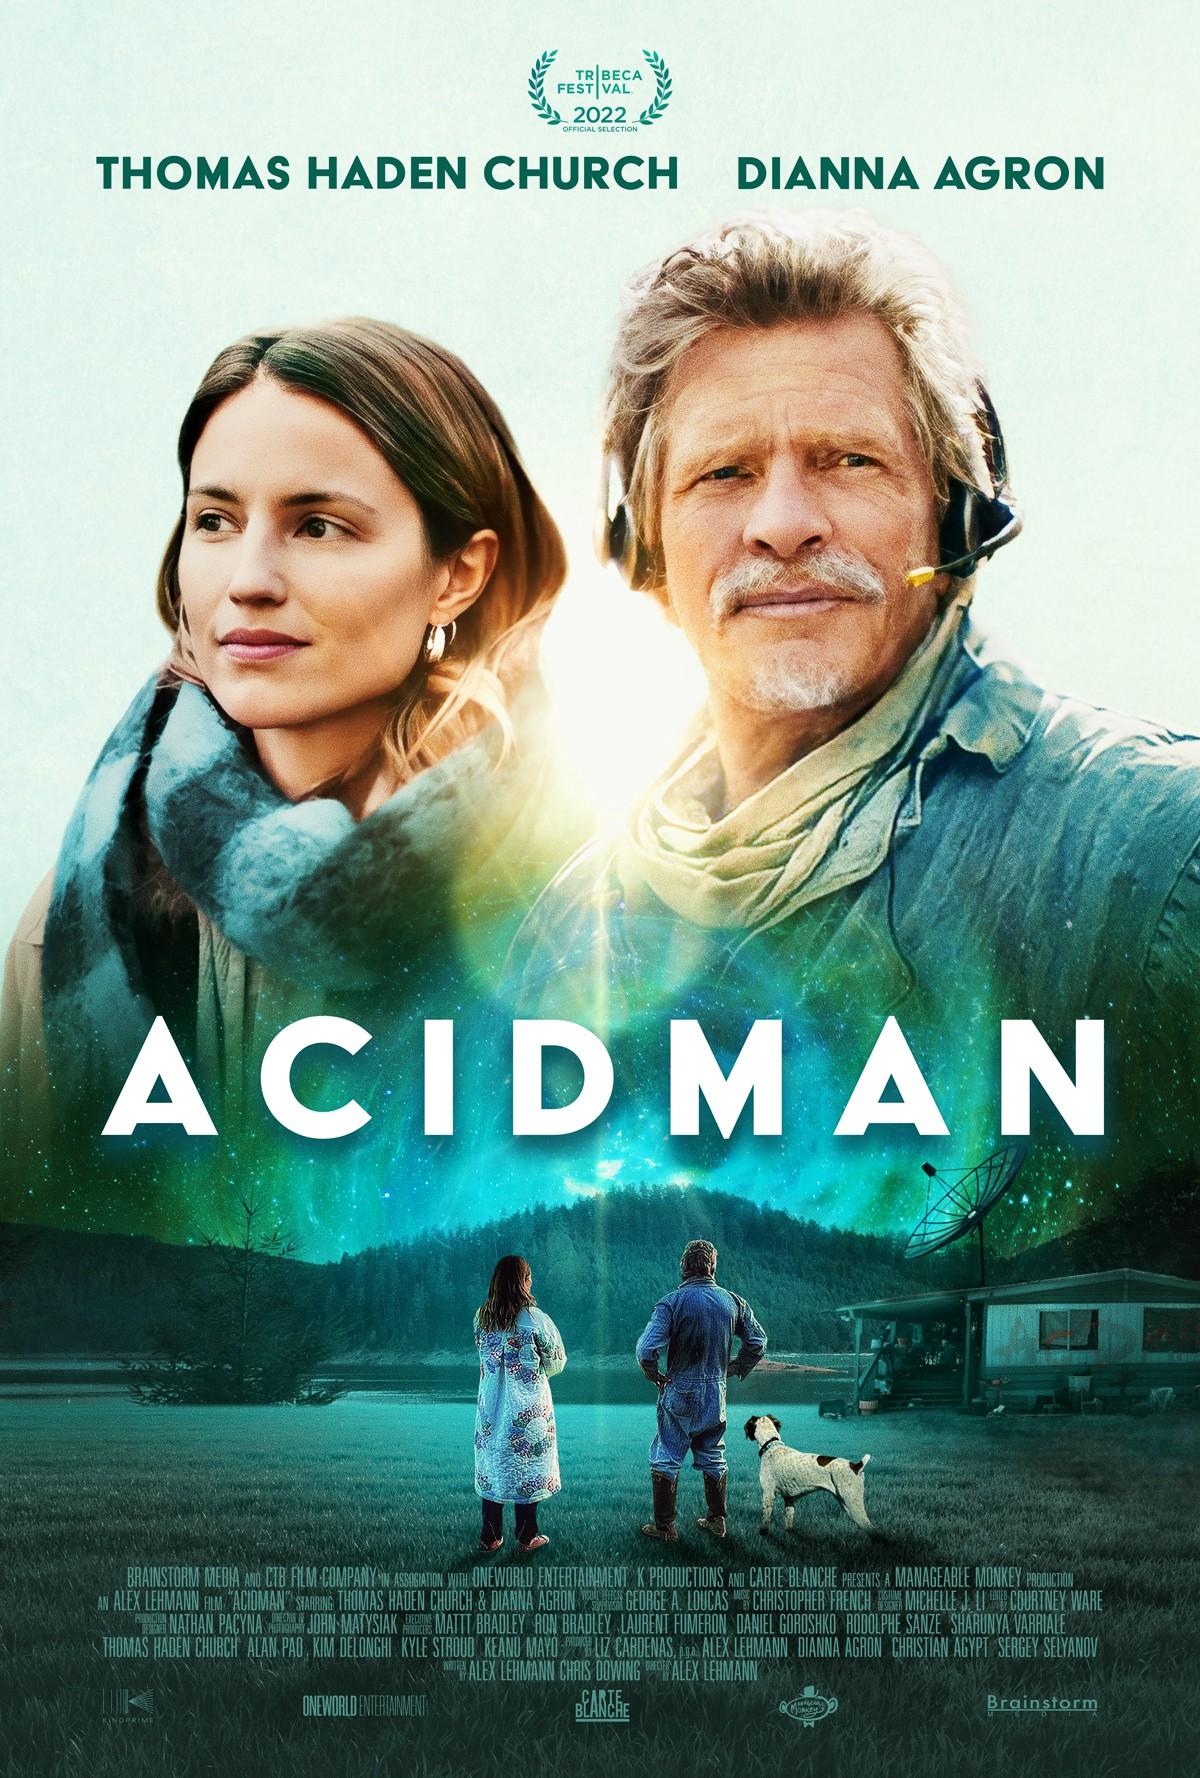 Movie poster for "Acidman." (Brainstorm media)